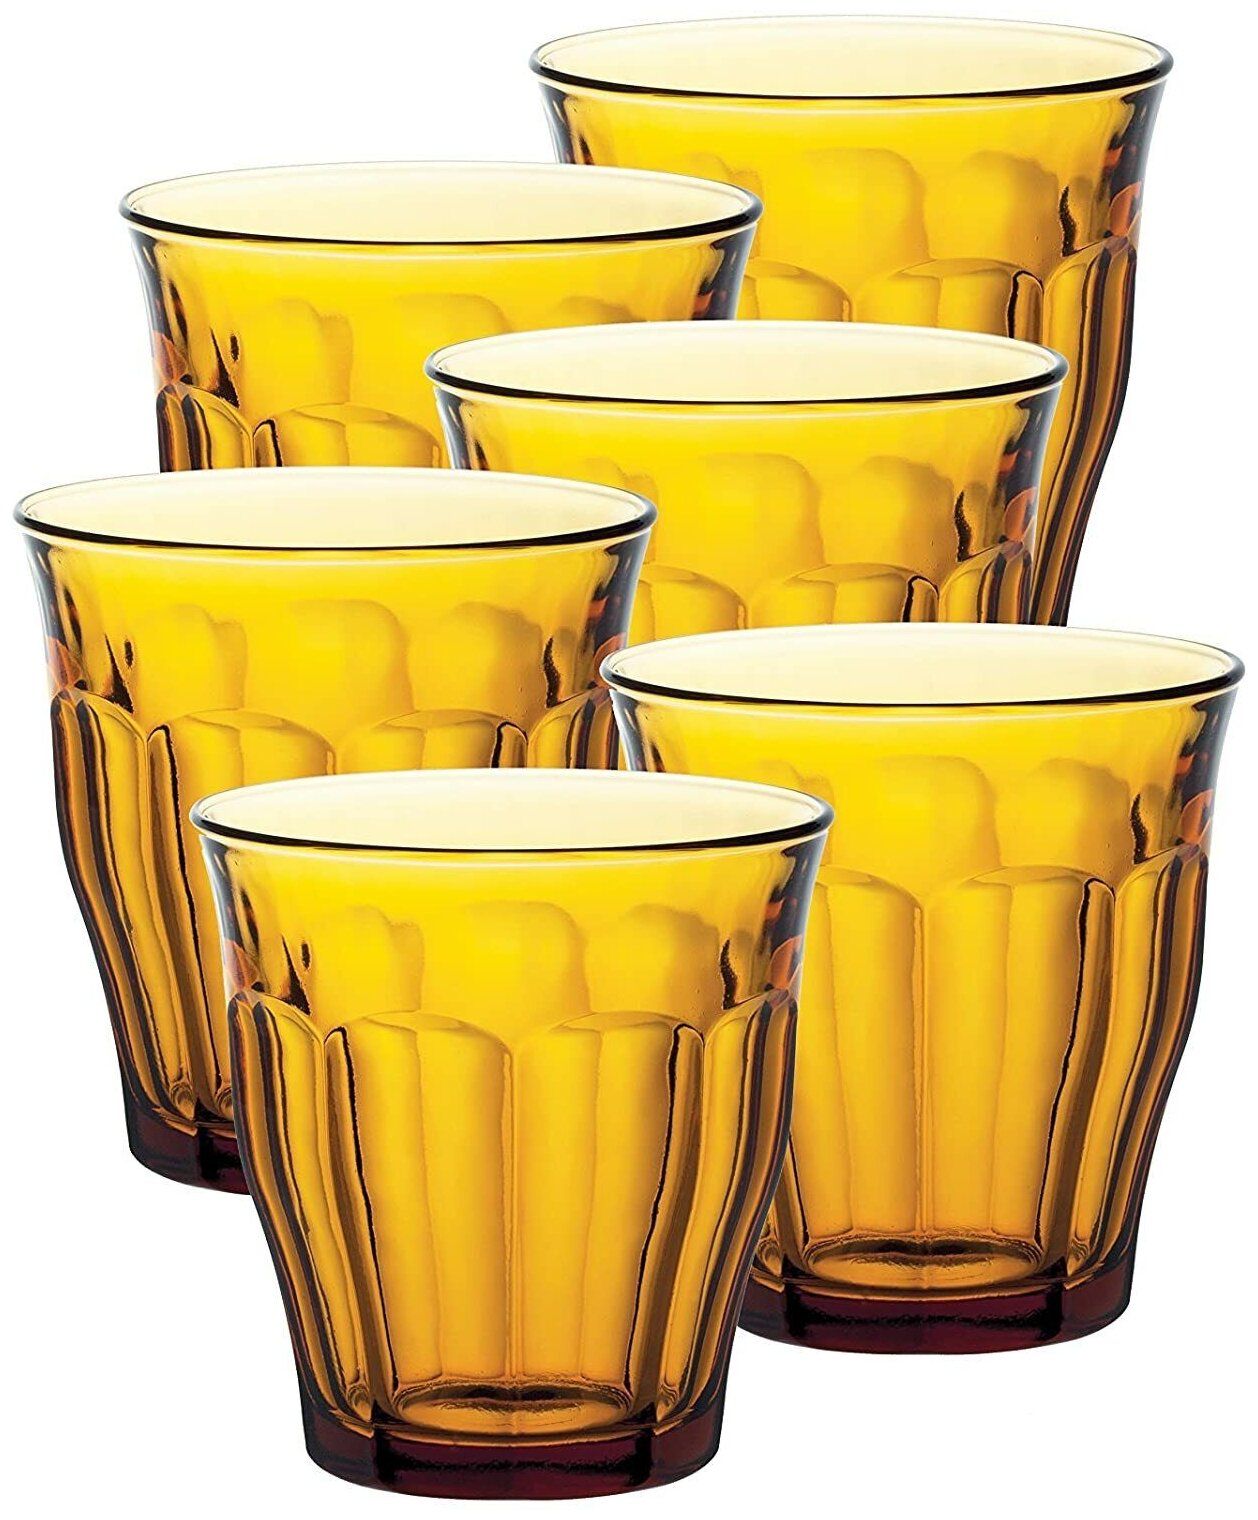 Набор стаканов французских PICARDIE AMBER 6шт 310мл DURALEX 1028DB06C0111 набор стаканов французских picardie marine 6шт 250мл duralex 1027bb06a0111